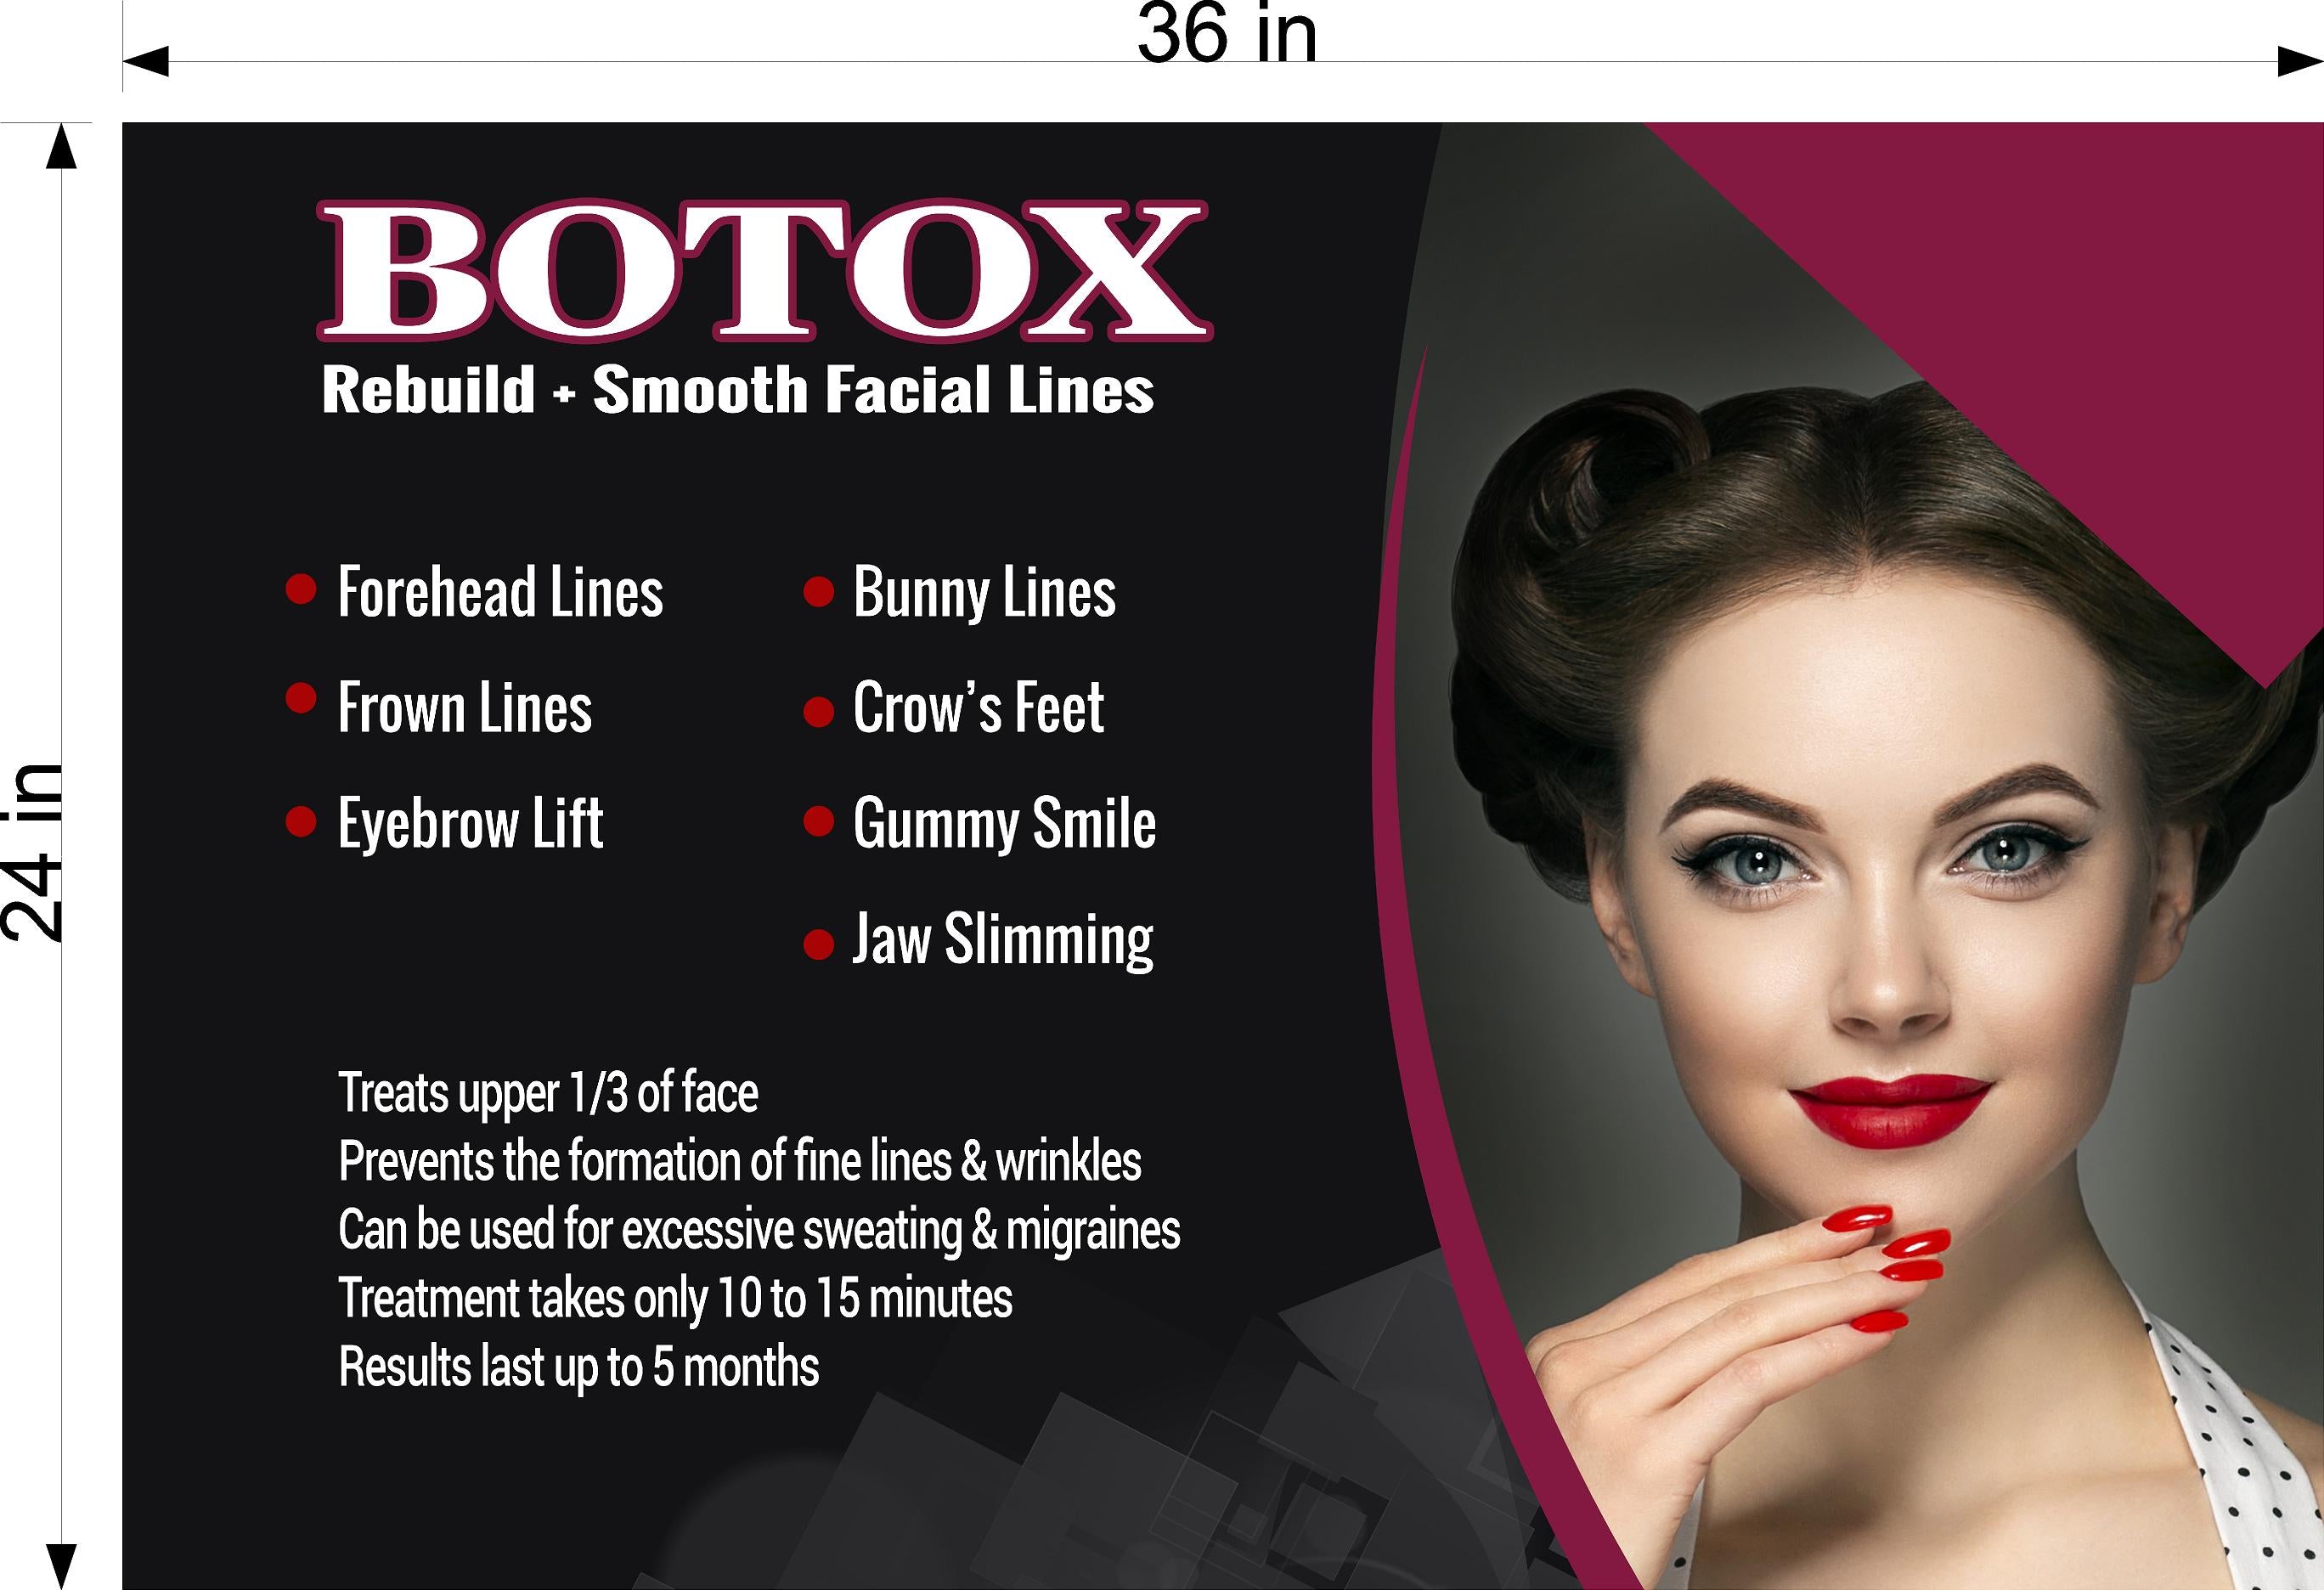 Botox 20 Photo-Realistic Paper Poster Premium Interior Inside Sign Advertising Marketing Wall Window Non-Laminated Horizontal